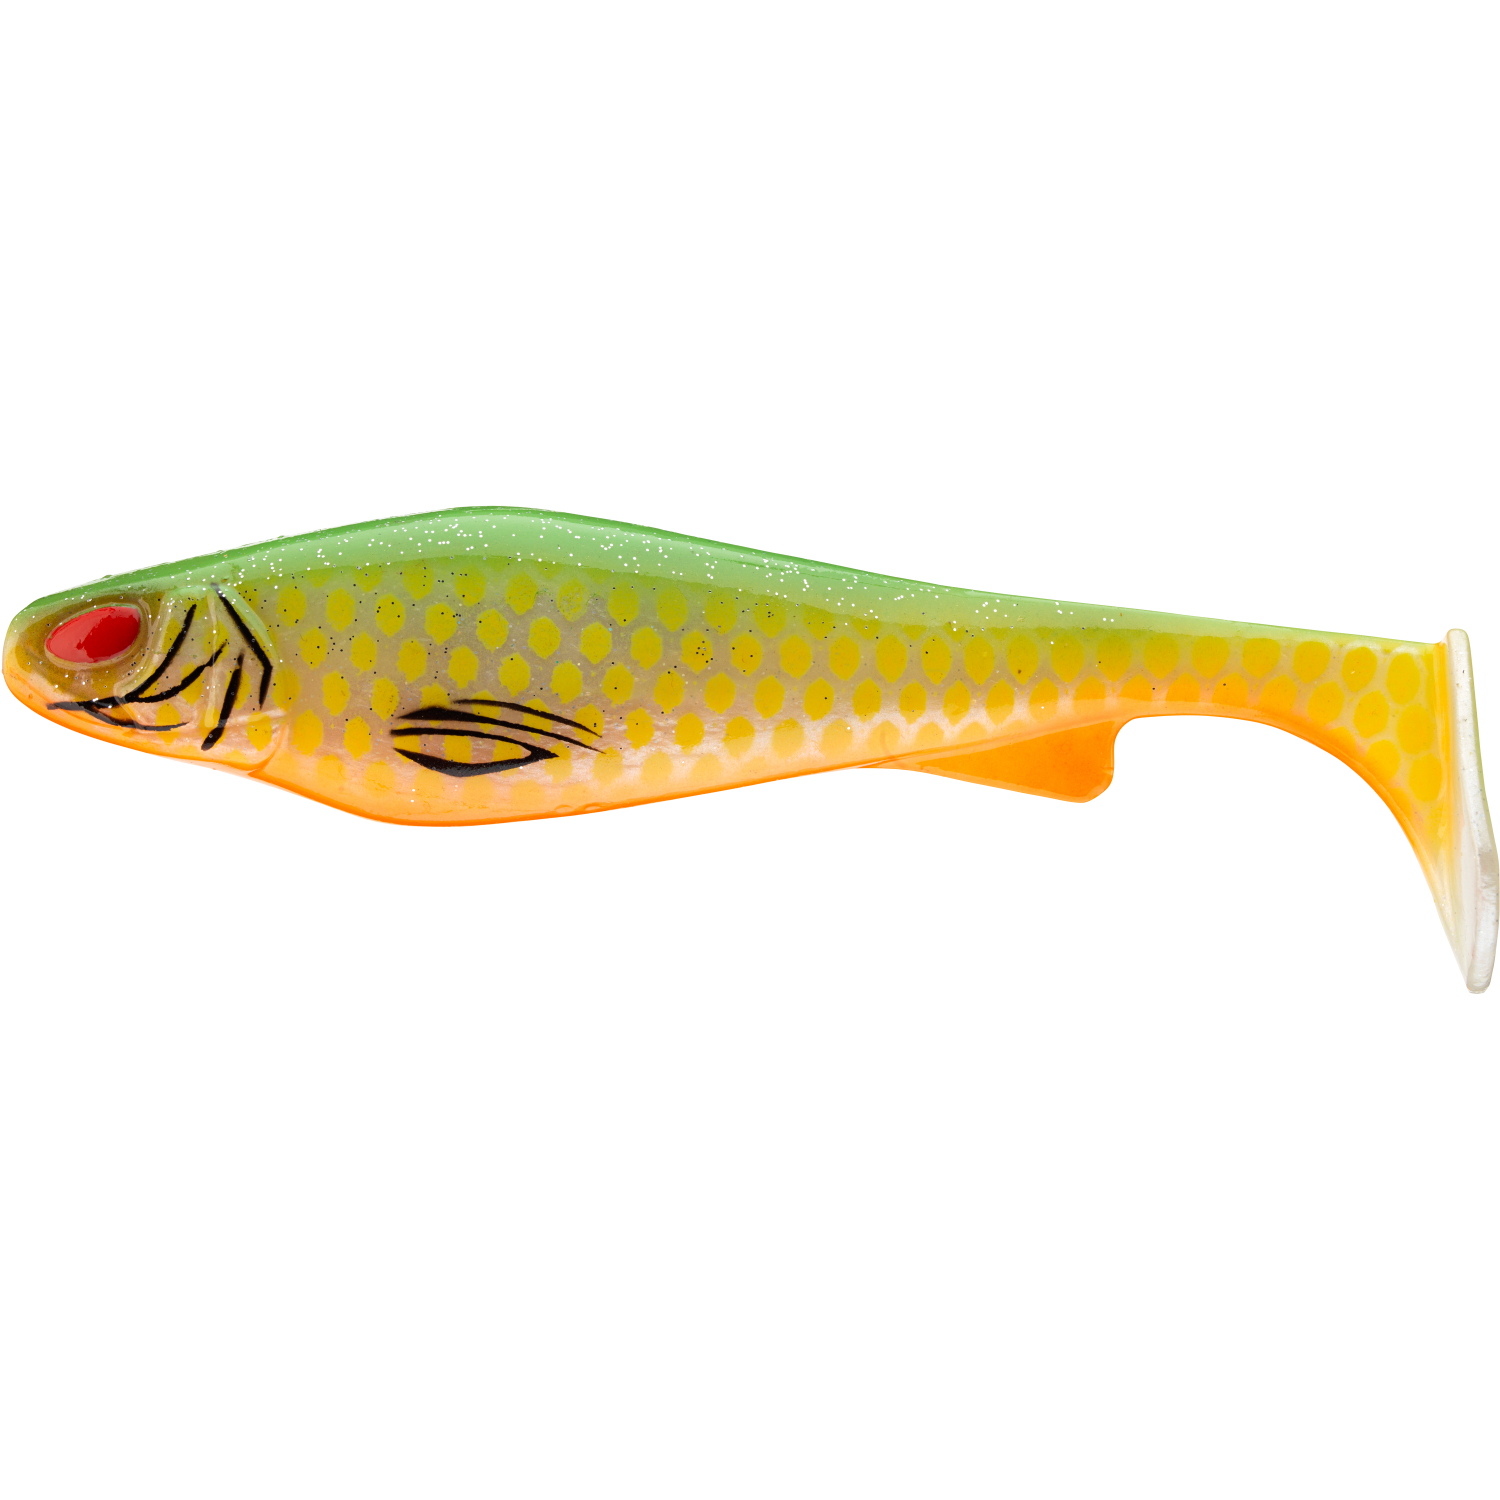 https://images.askari-sport.com/en/product/1/large/prorex-rubber-fish-lazy-shad-olive-roach-uv.jpg